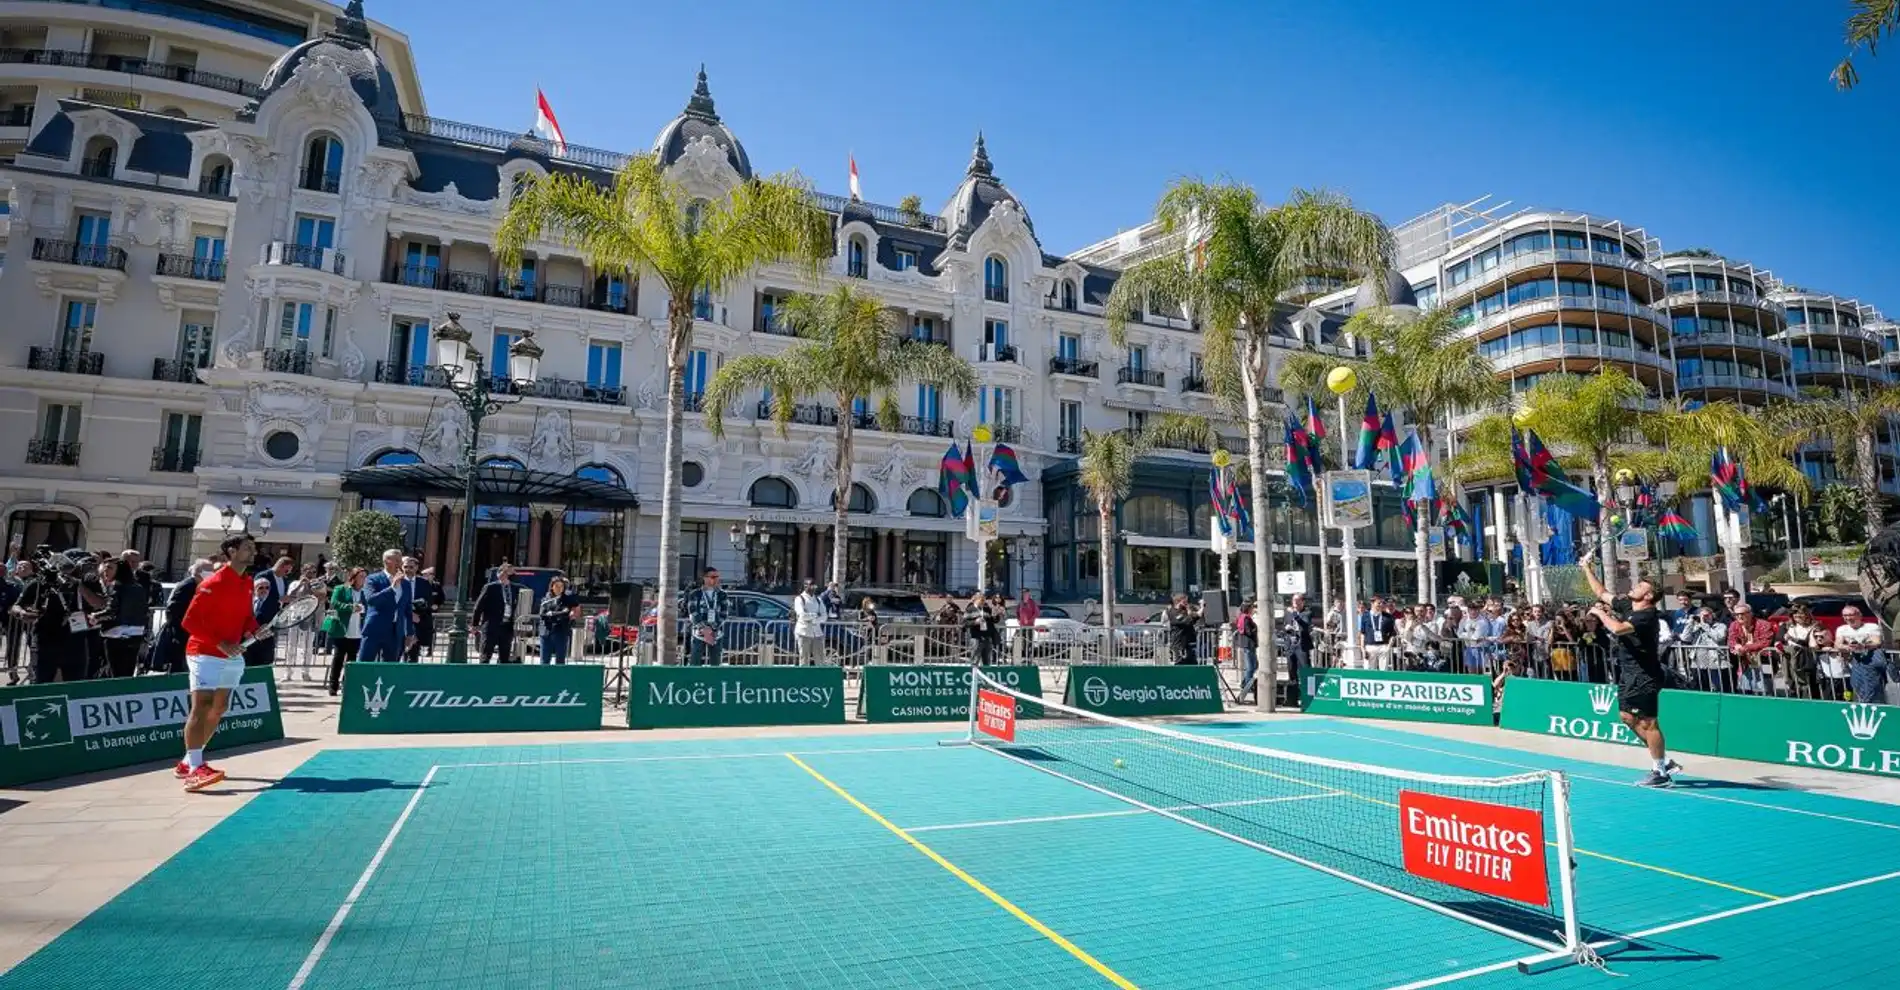 Tennis - Place du Casino de Monte-Carlo